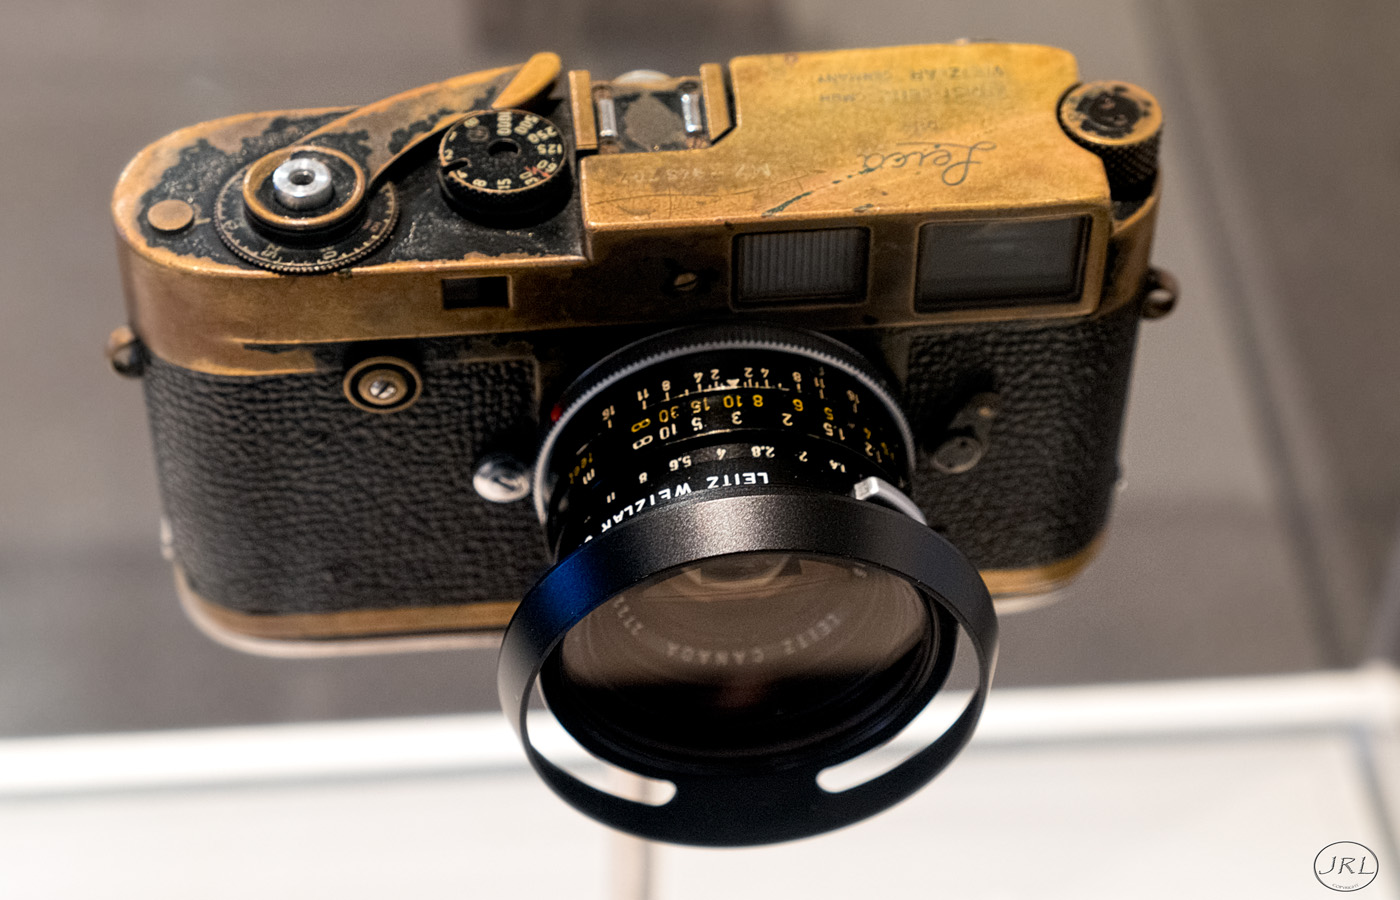 Leica M2 camera, with 35mm lens.